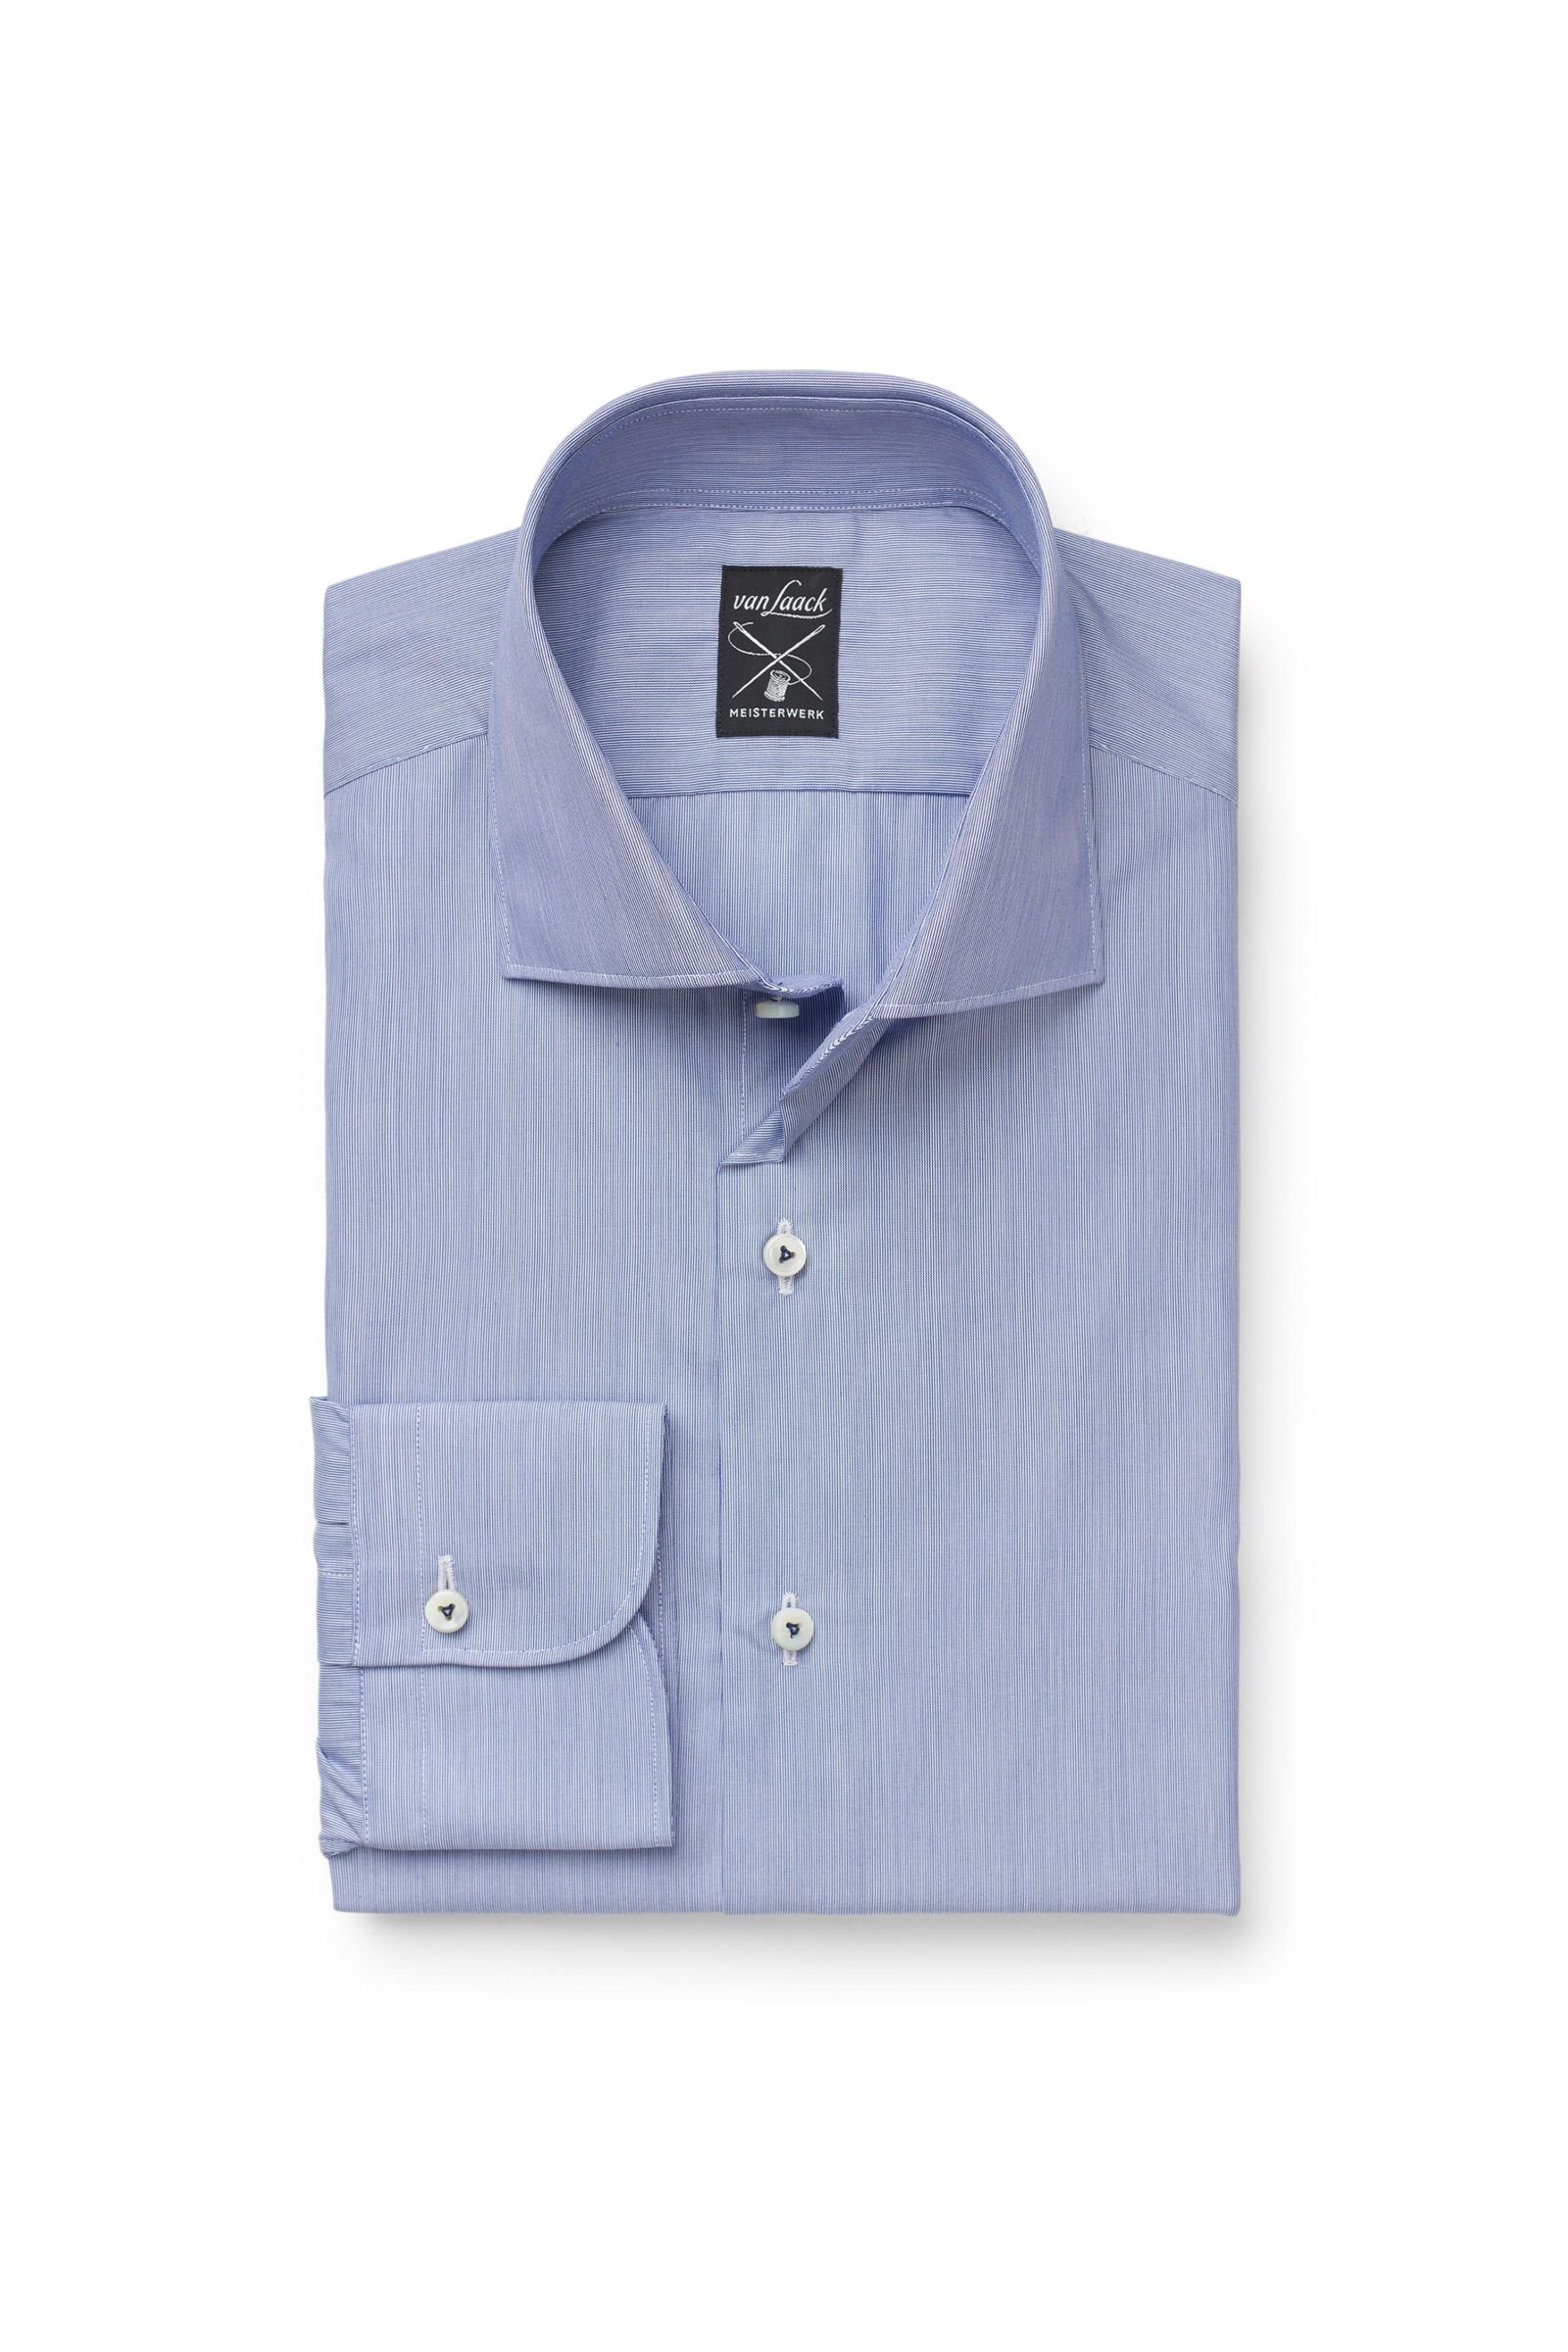 Business shirt 'Mivara Tailor Fit' shark collar grey-blue striped